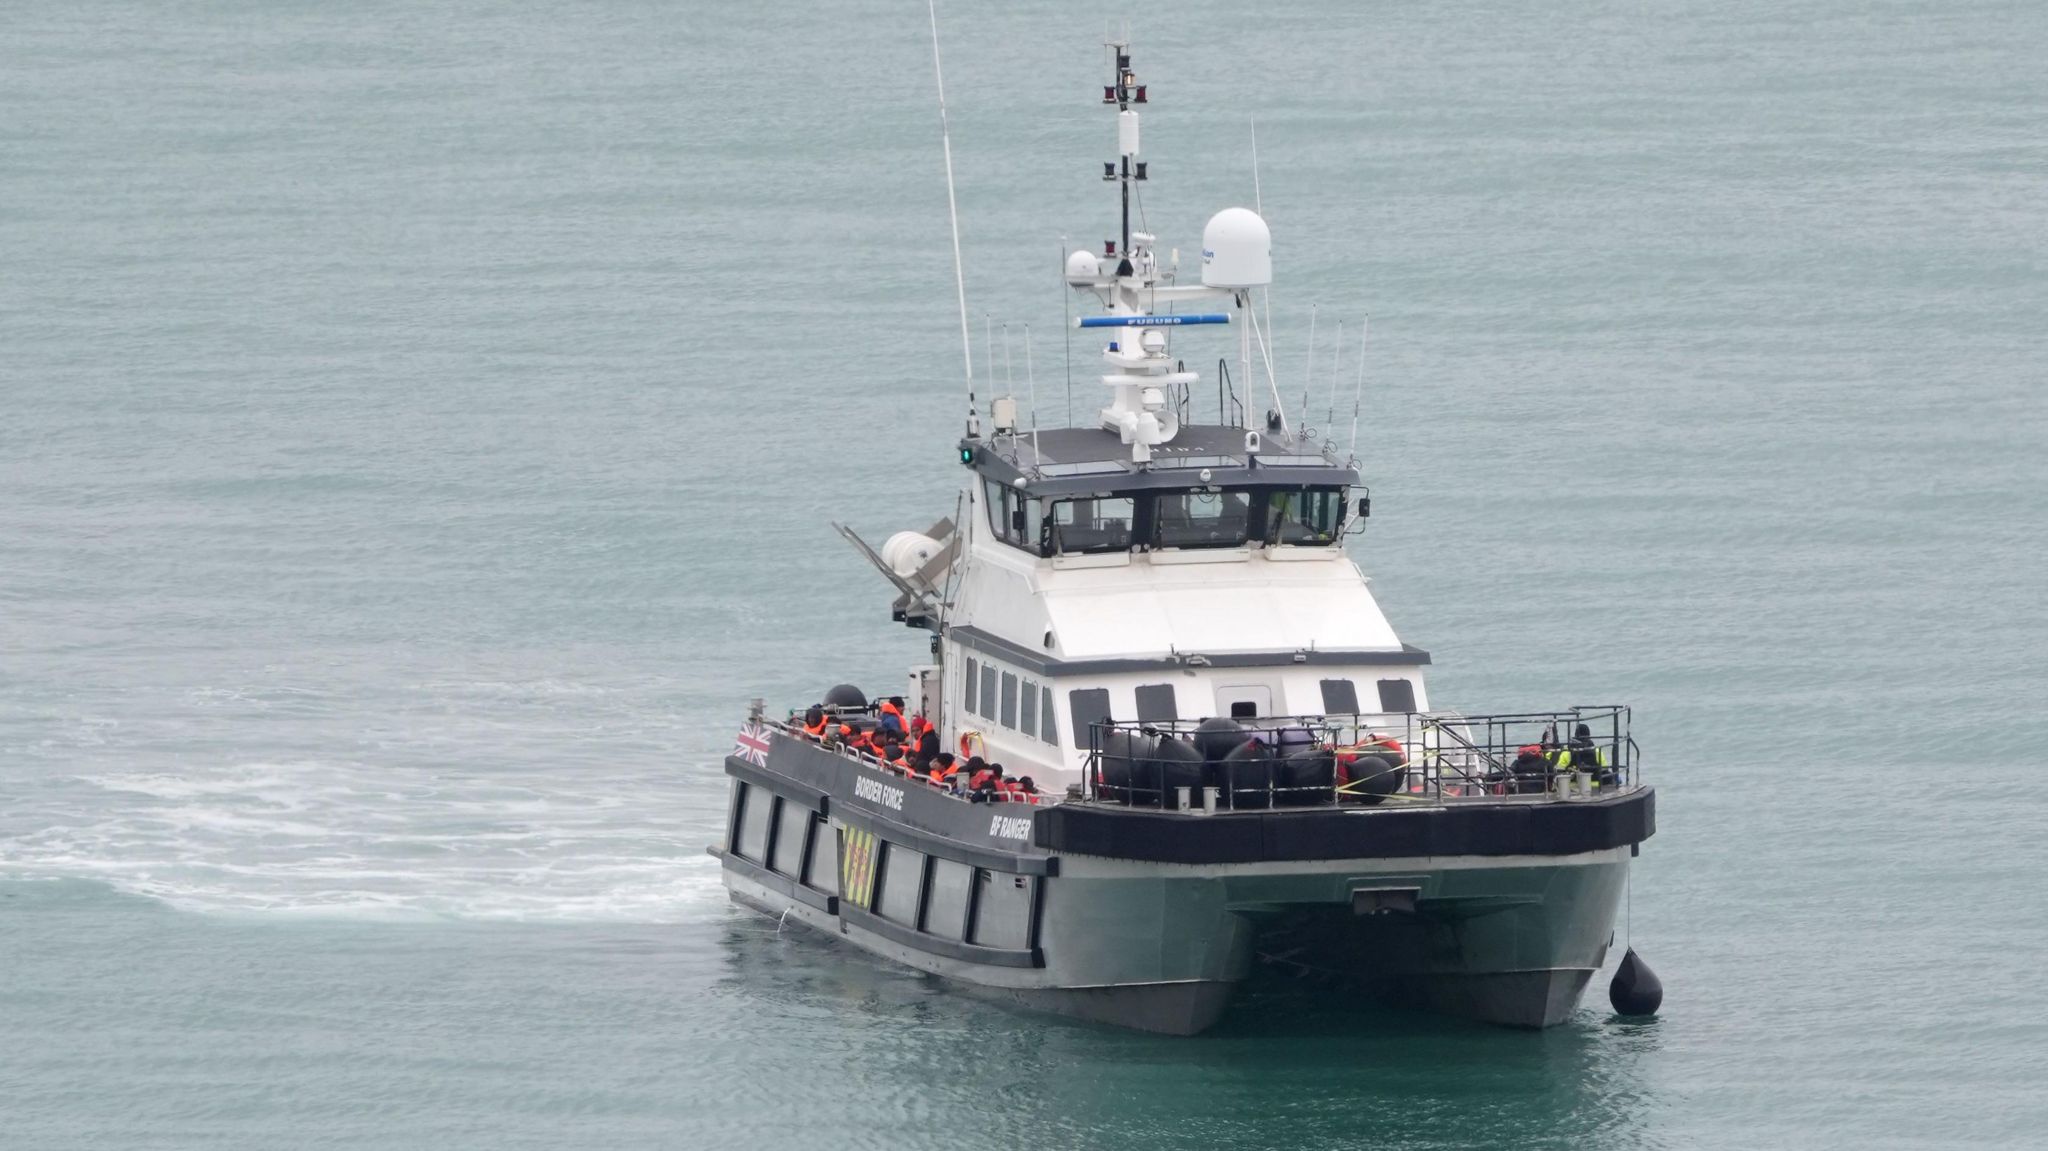 A UK Border Force vessel bringing migrants into Dover